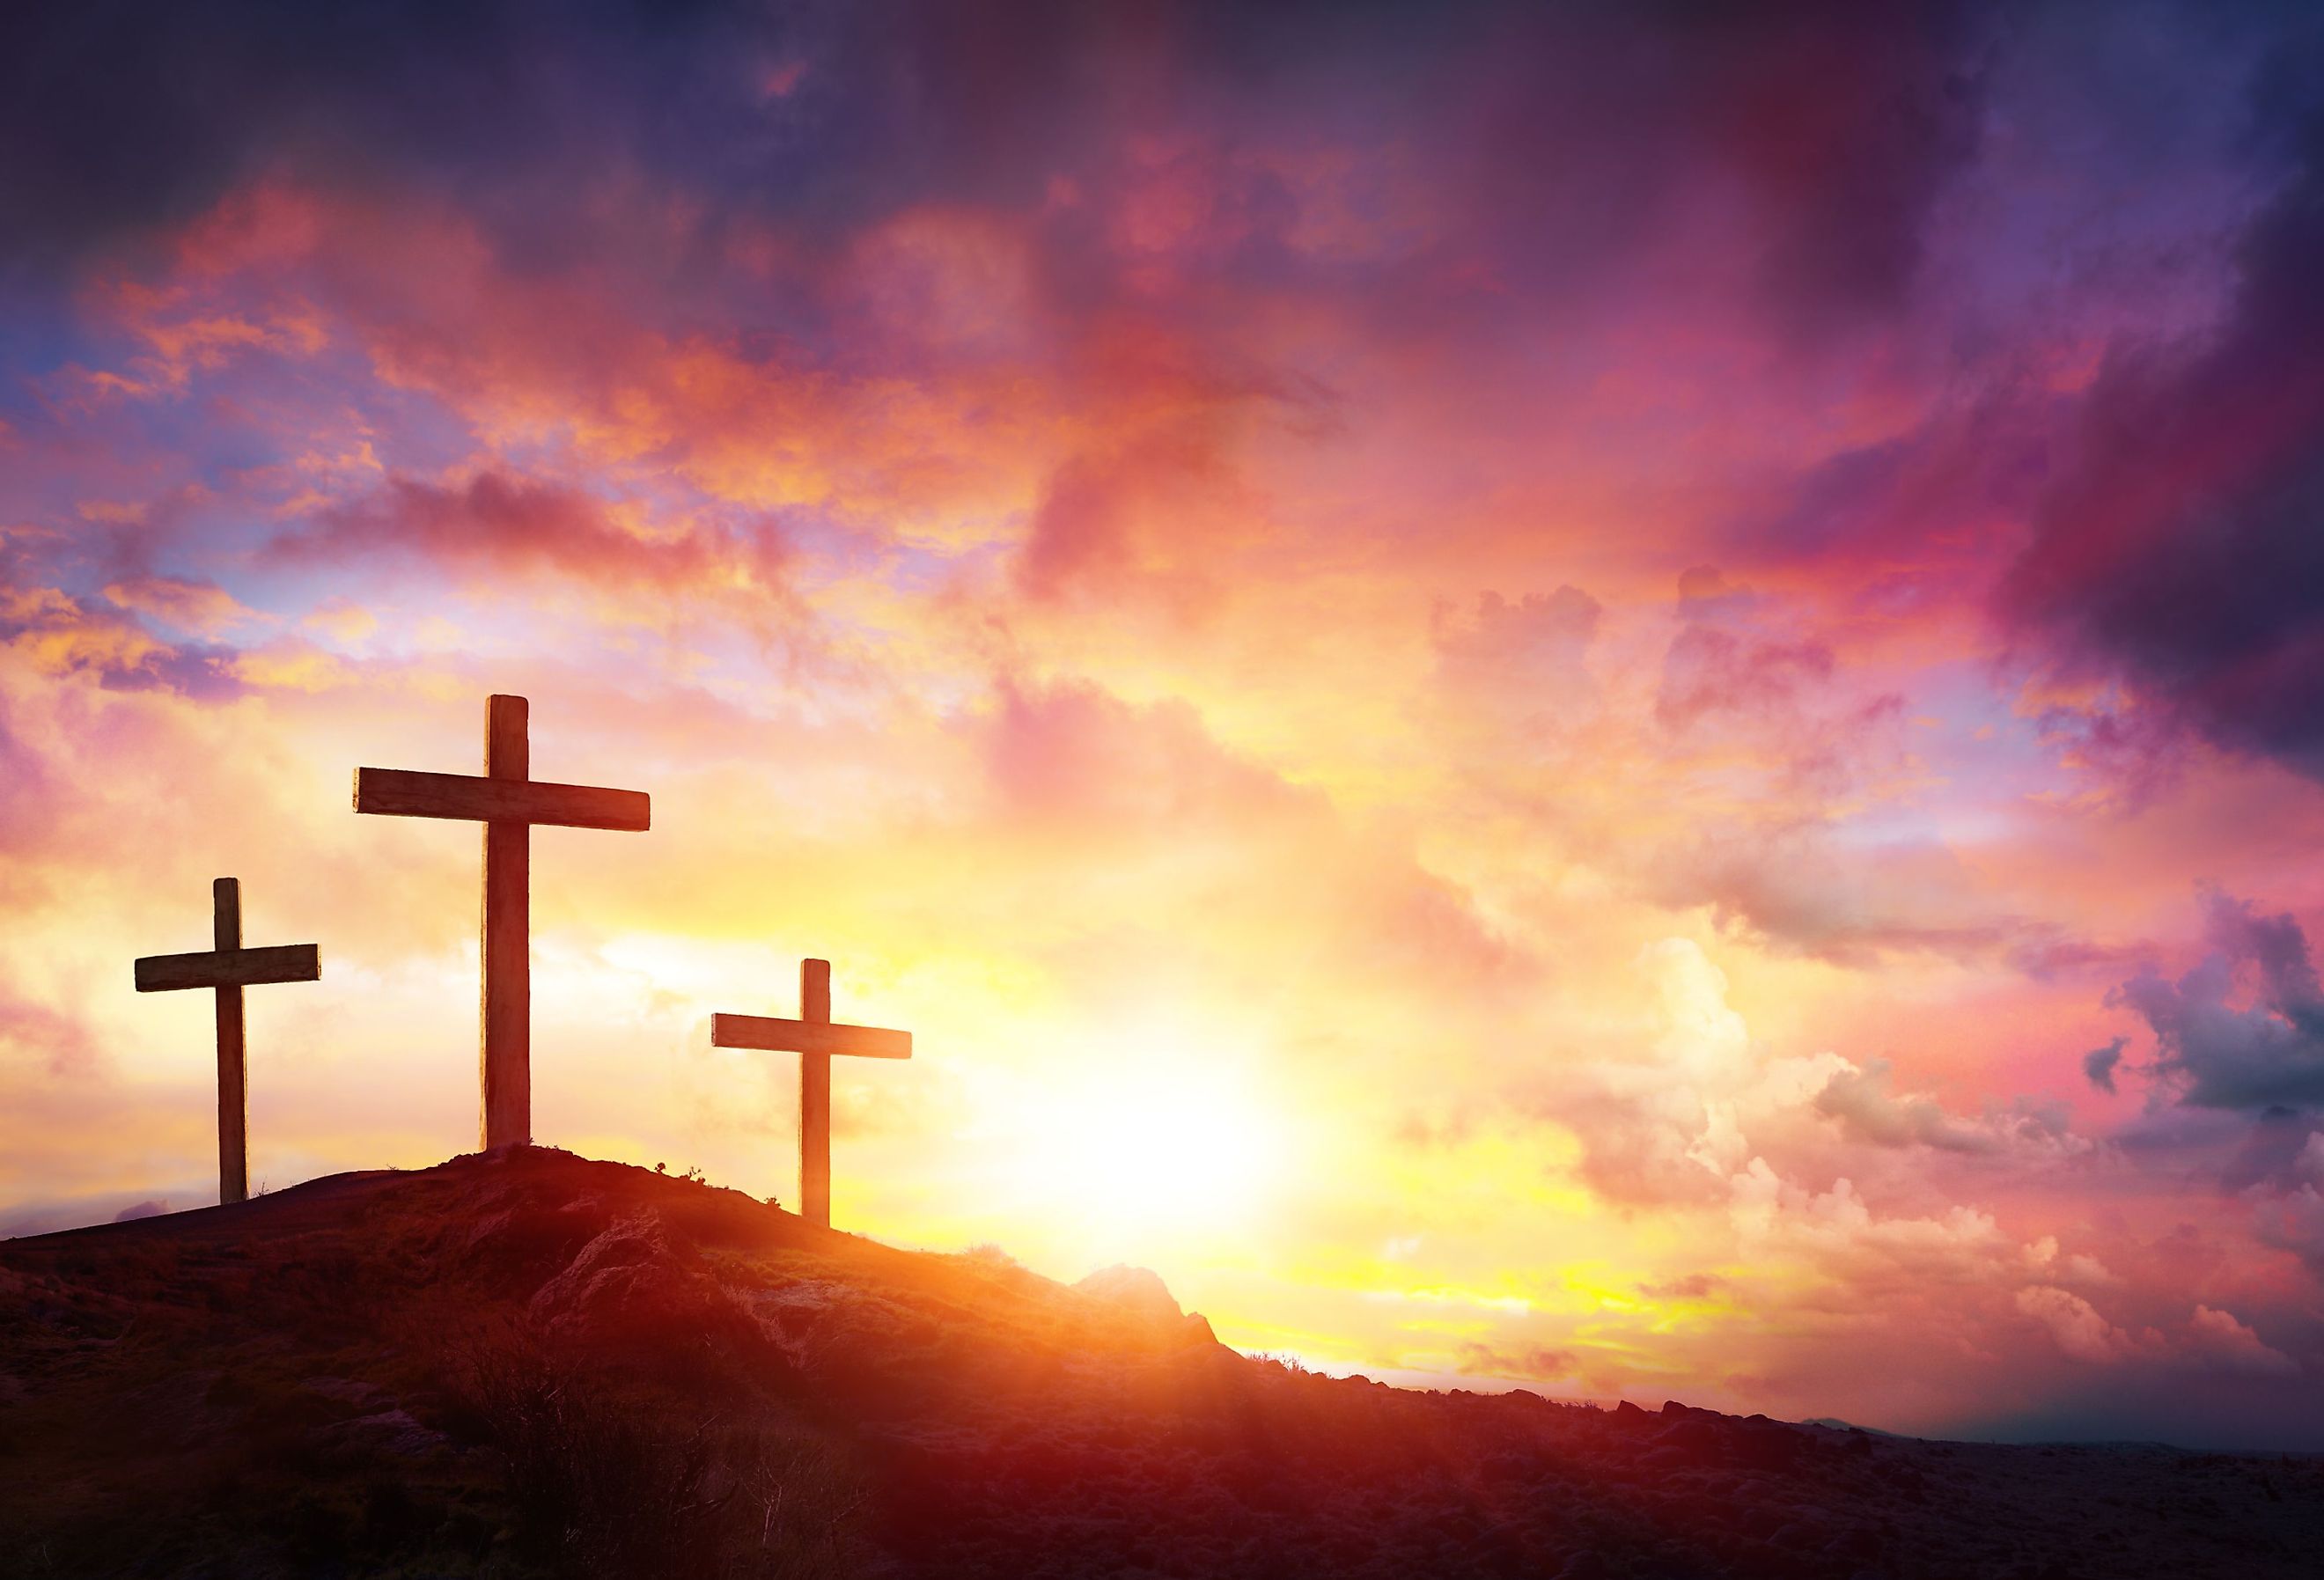 Crucifixion Of Jesus Christ At Sunrise, Three Crosses On Hill. Image credit: Romolo Tavani via Shutterstock